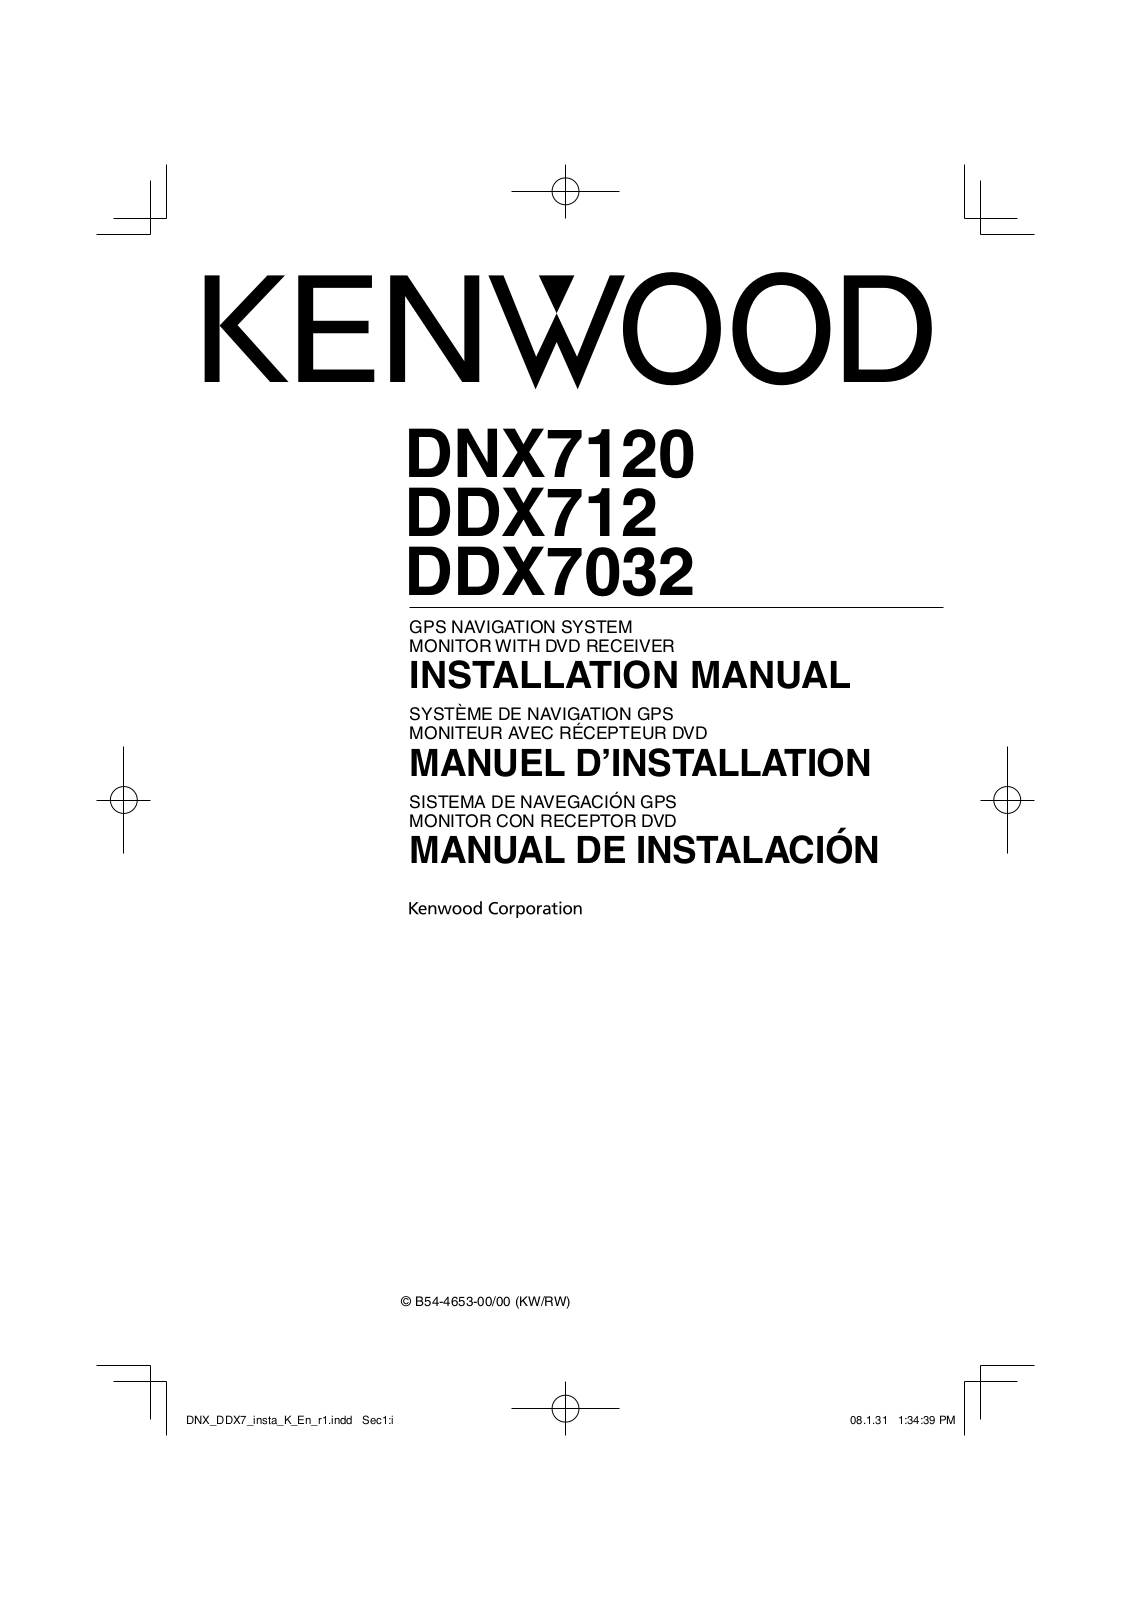 KENWOOD DNX 712, DNX 7032 Installation Manual